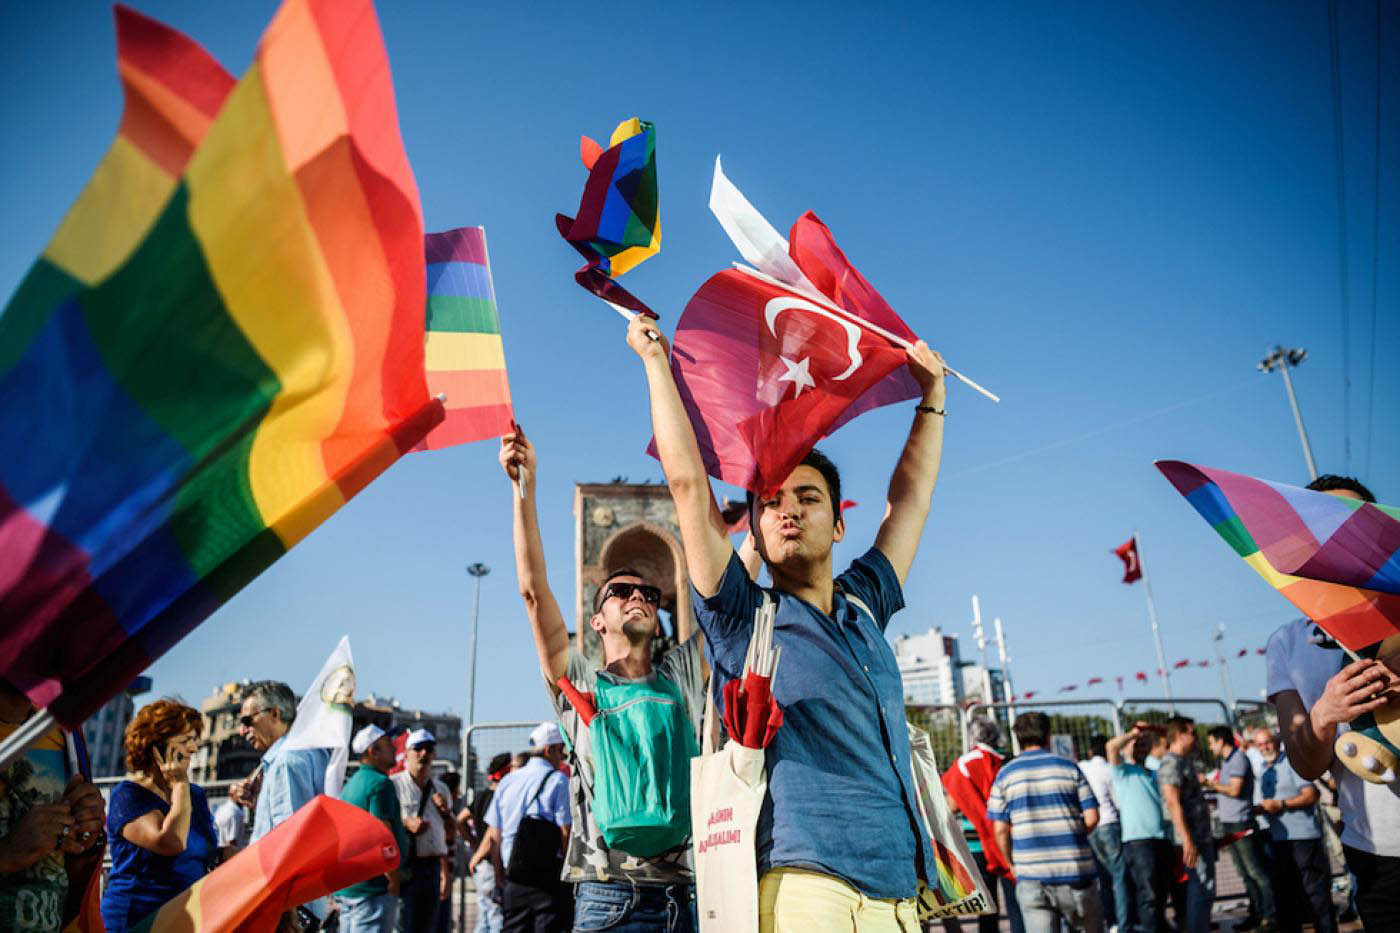 Court overturns bans on Pride events in Turkey